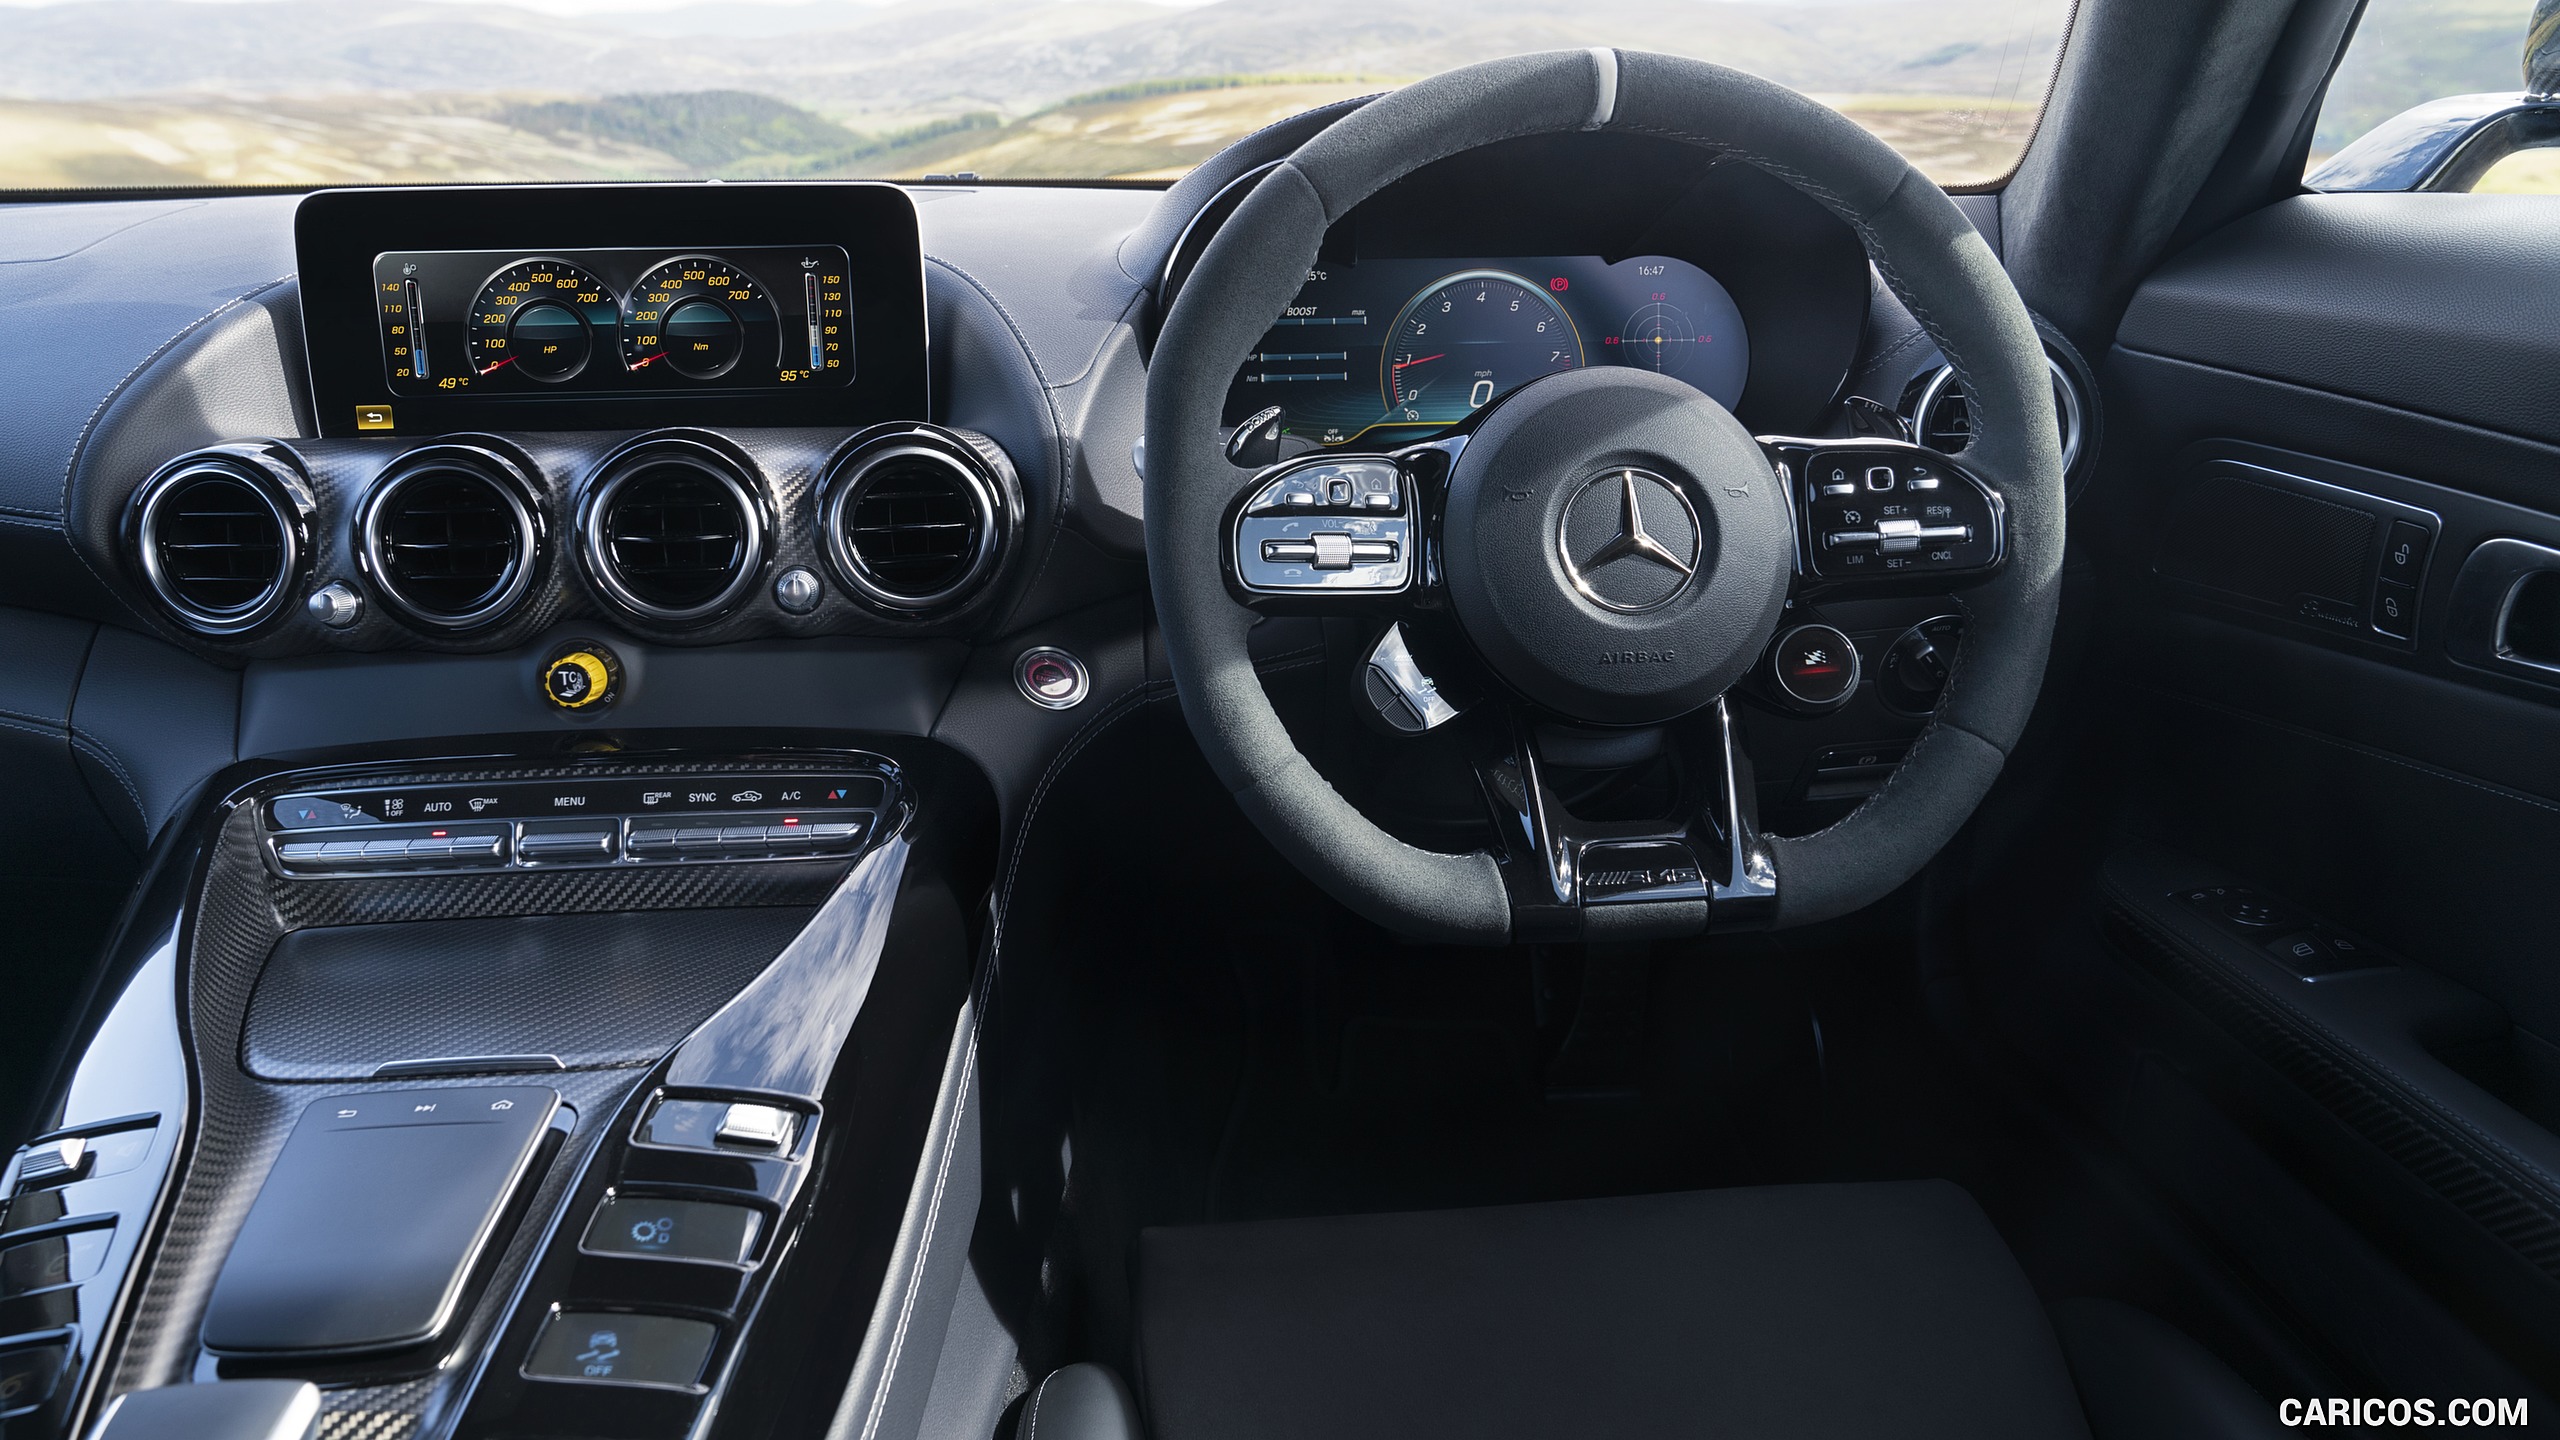 2020 Mercedes-AMG GT R Pro (UK-Spec) - Interior, Cockpit, #128 of 136